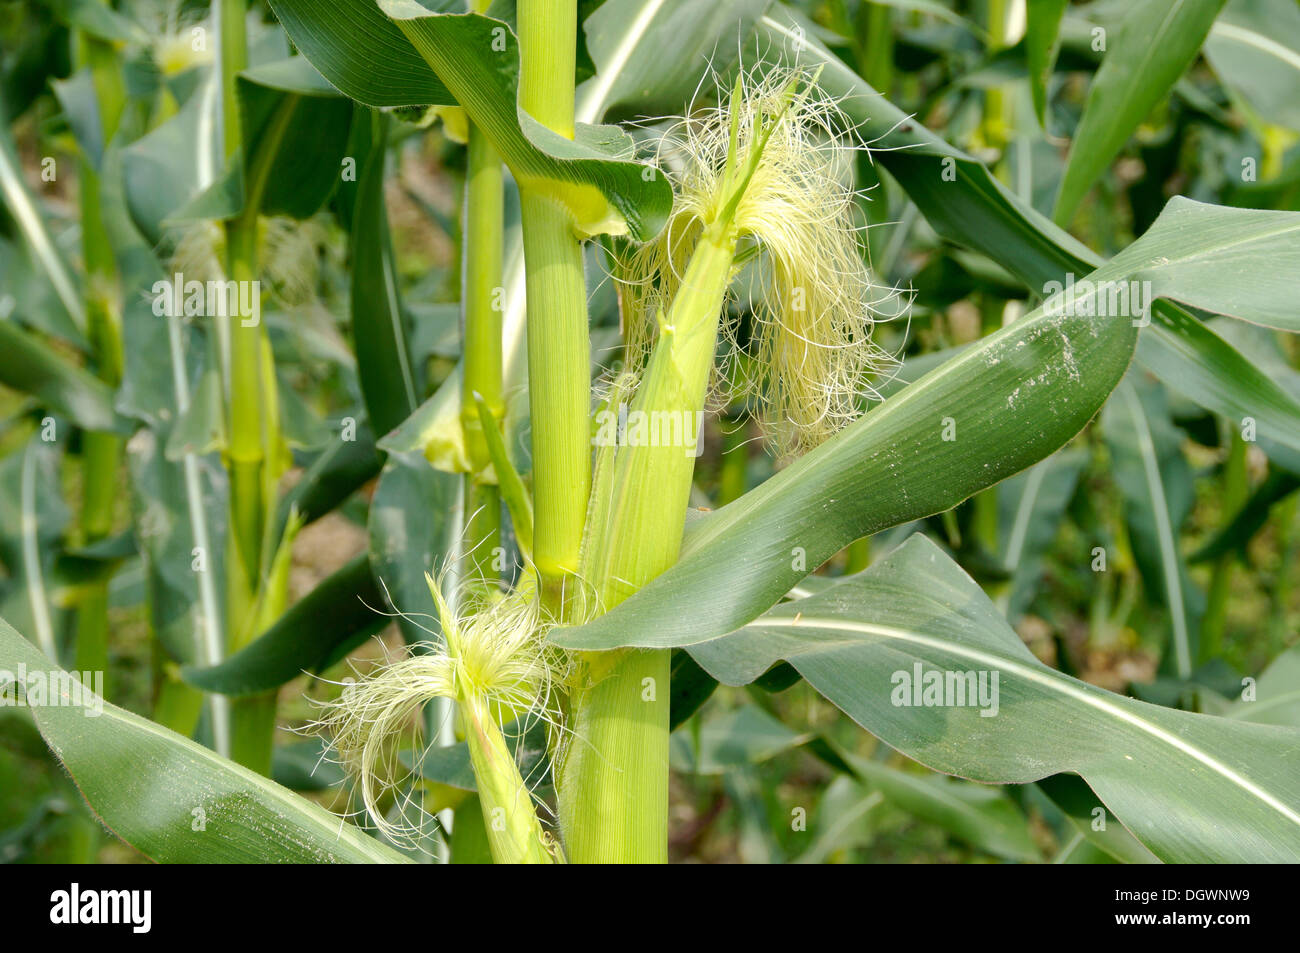 Corn stalks in field Stock Photo